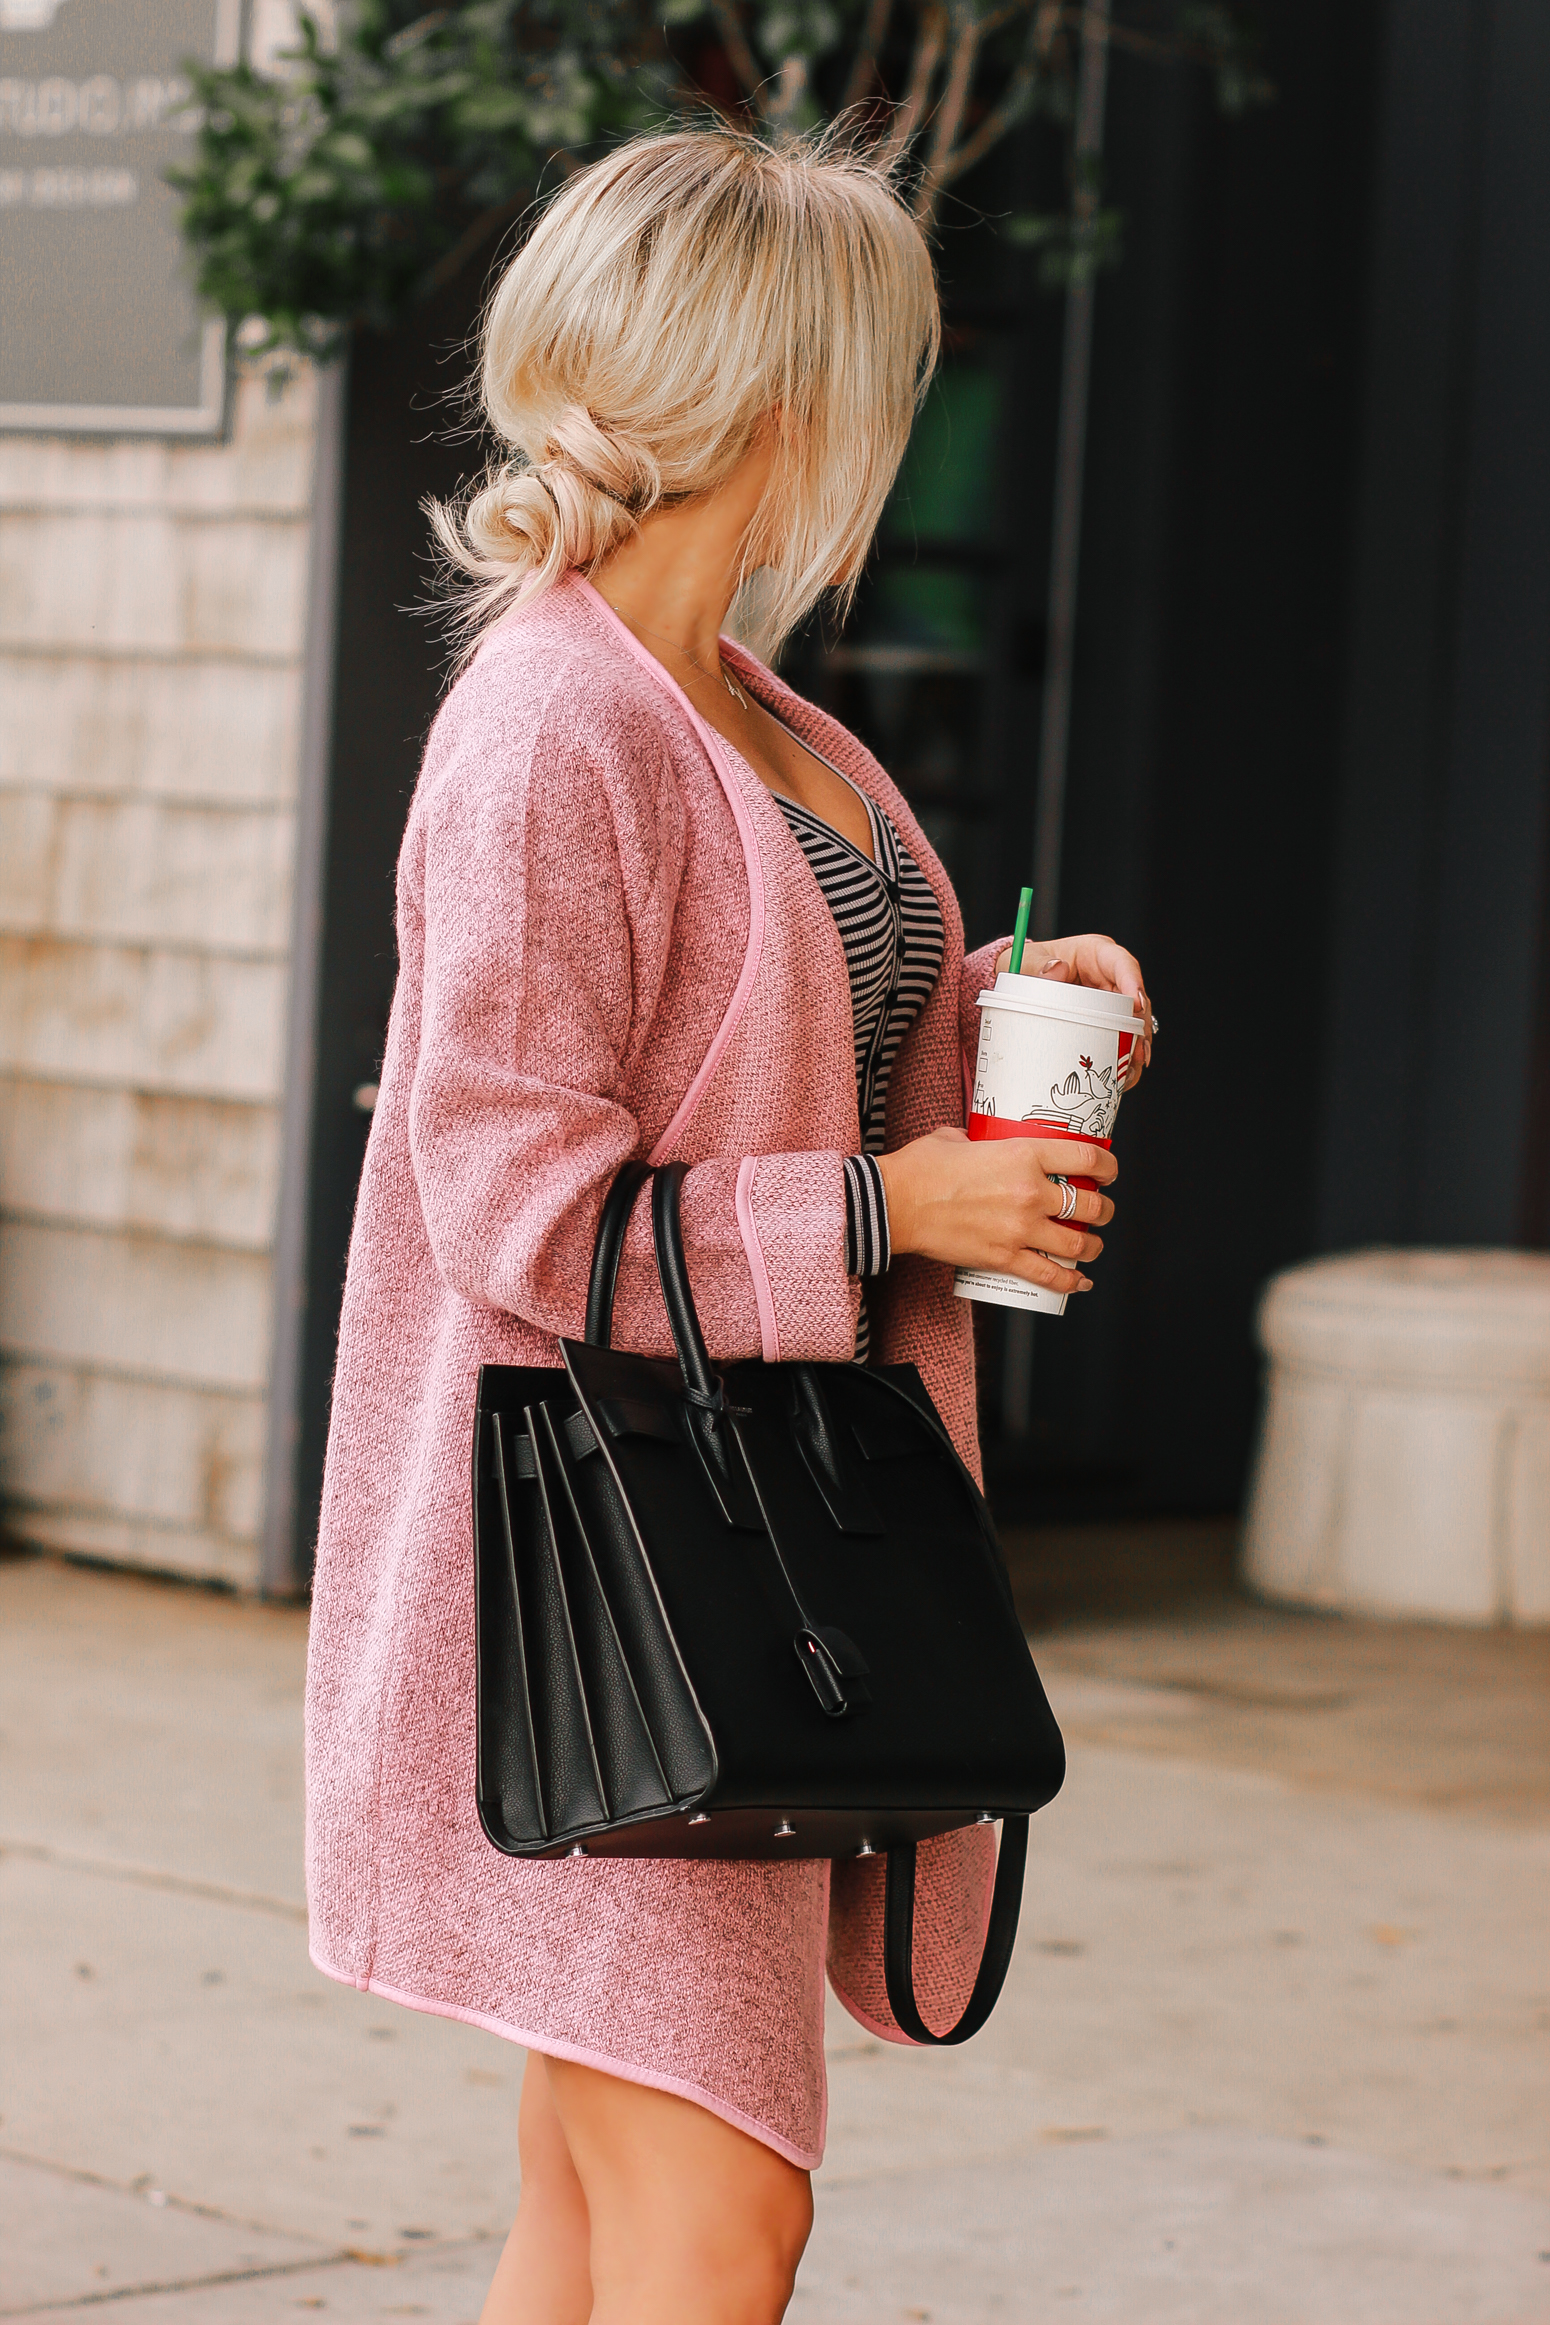 Pink Fall Coat | Striped Dress | Fringe Heels |YSL Bag | Fall Fashion